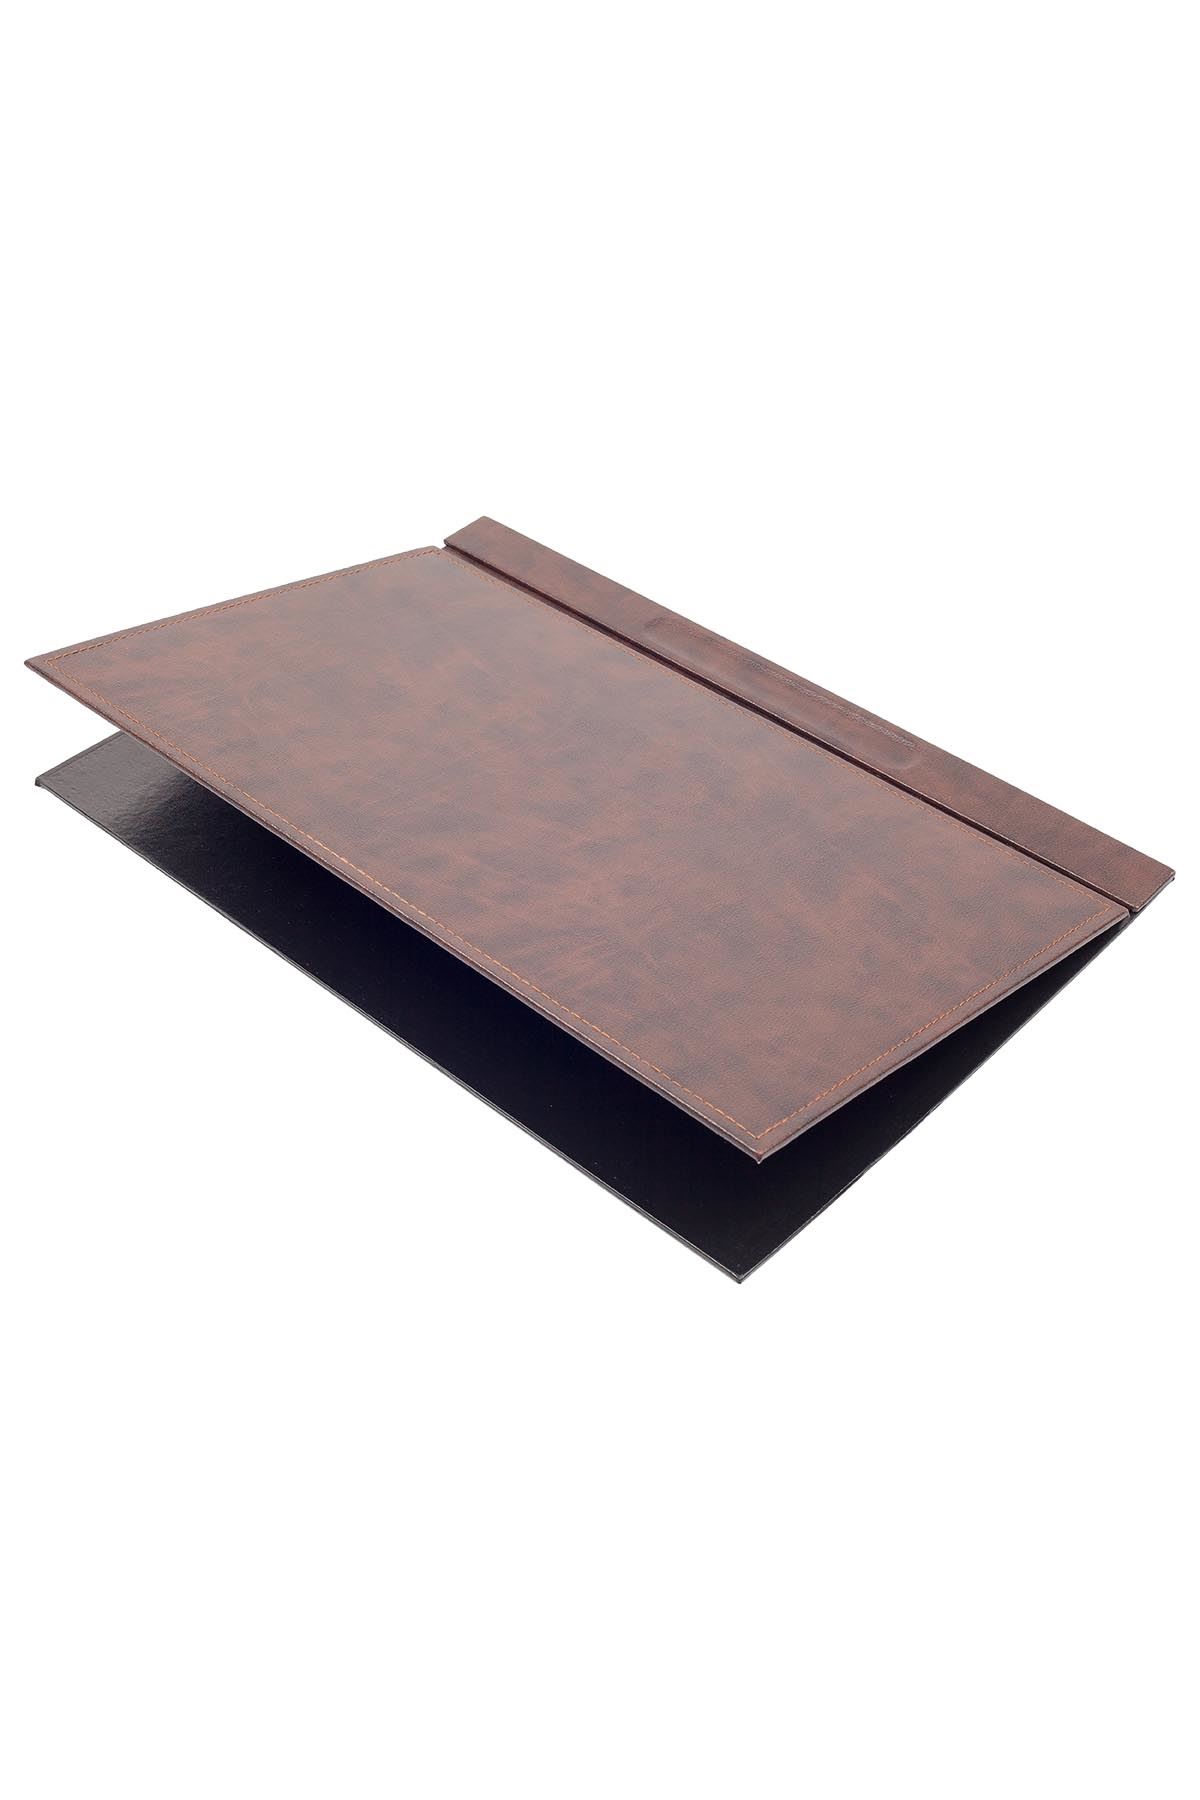 Leather Desk Set 8 Accessories Brown